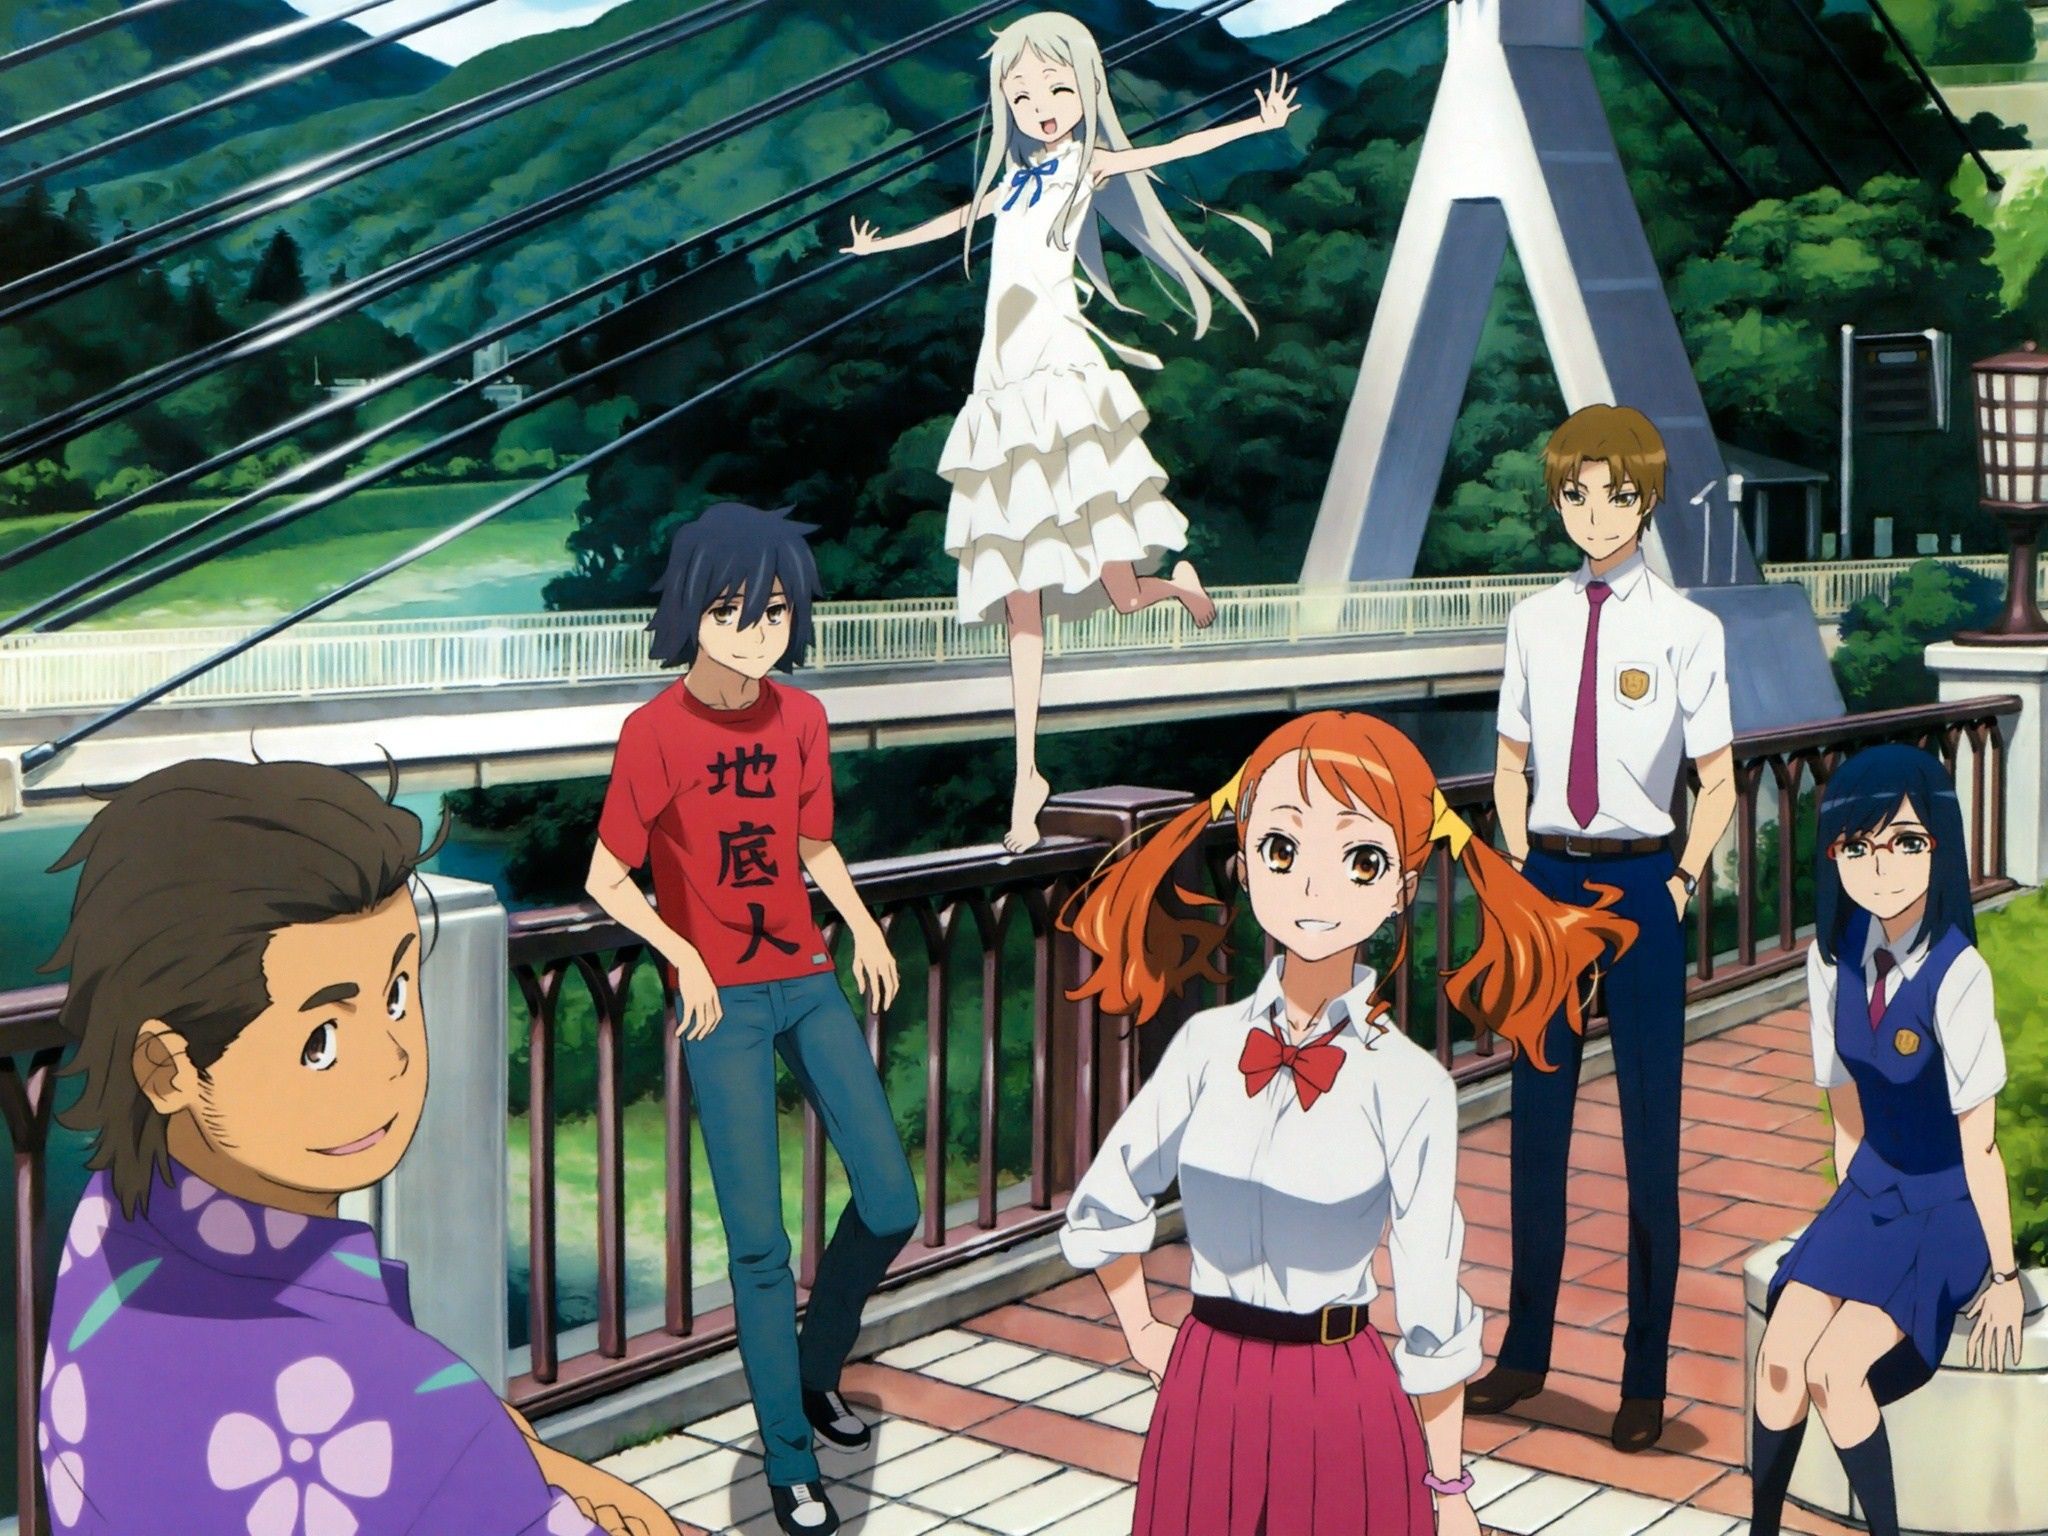 Ini Nih 10 Anime Sedih Yang Bakal Bikin Kamu Nangis Semalaman